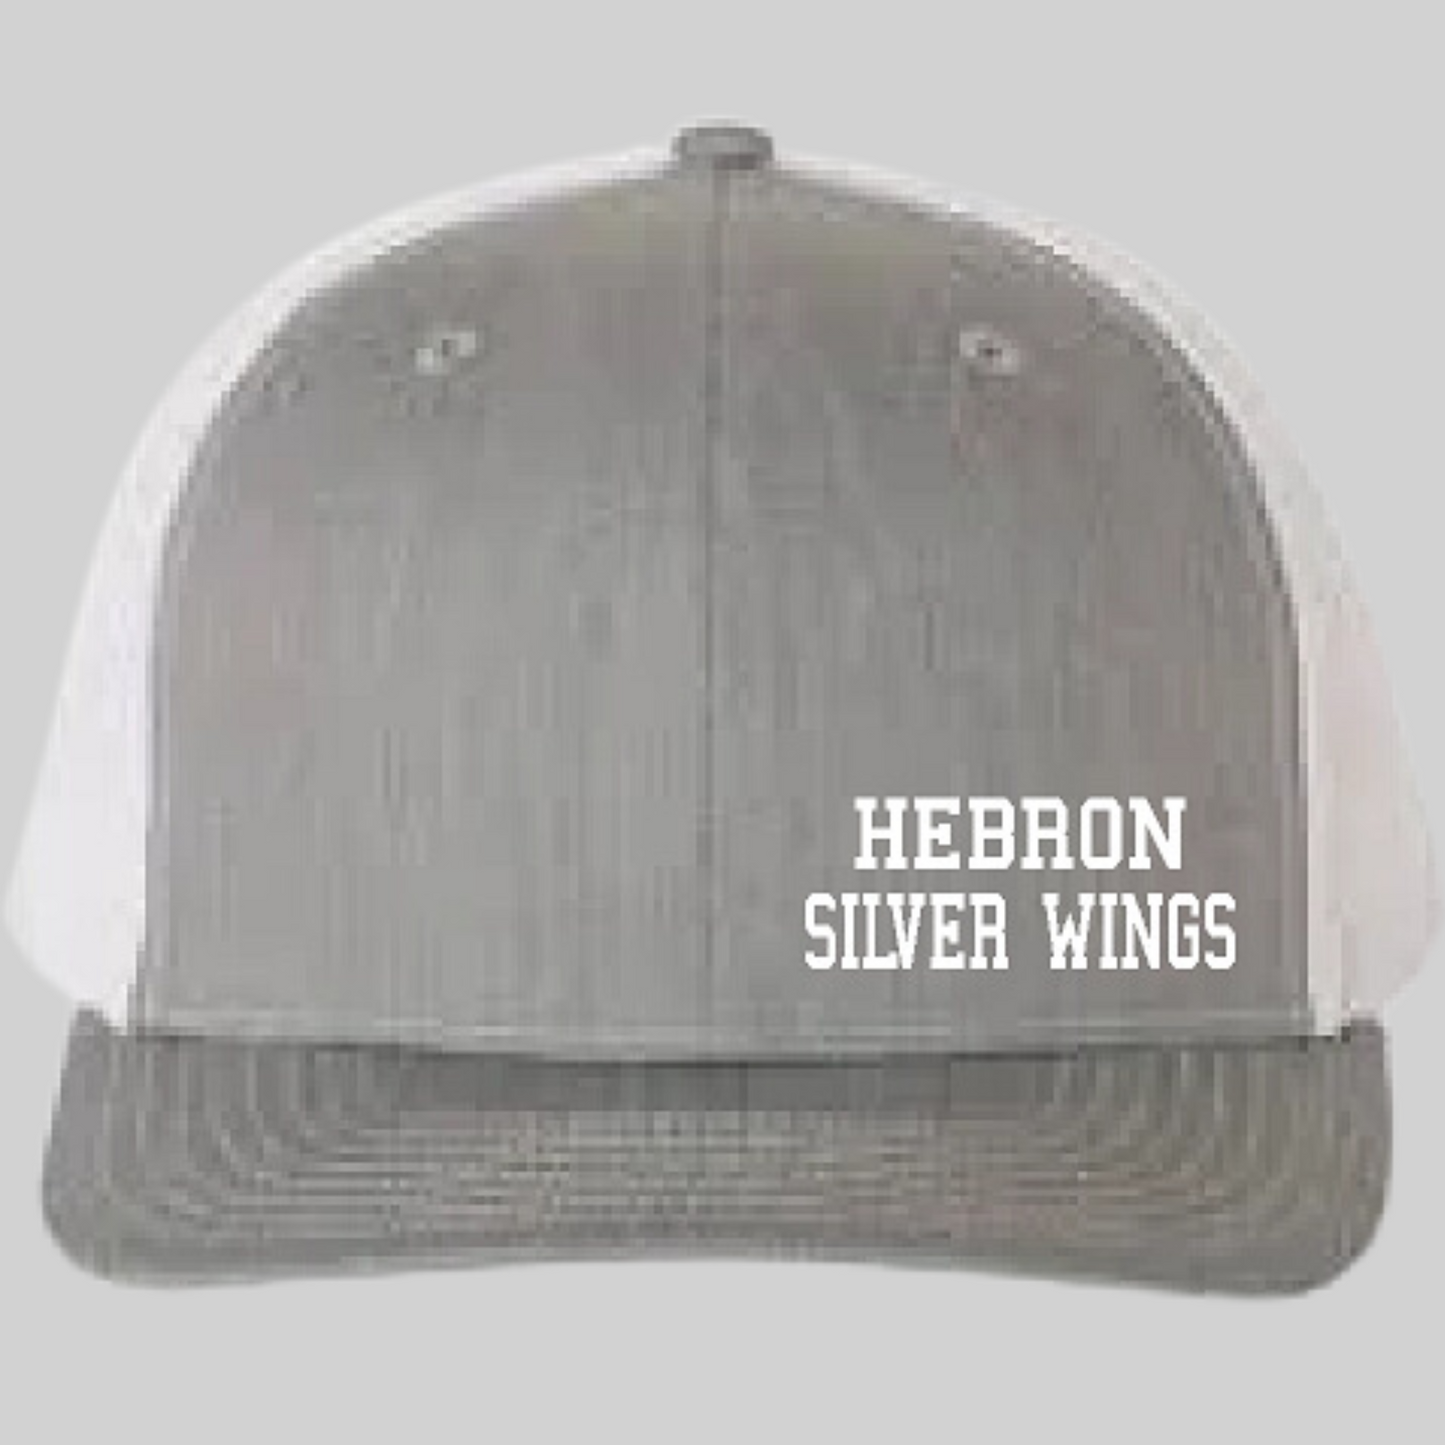 Hebron High School Silver Wings 24-12